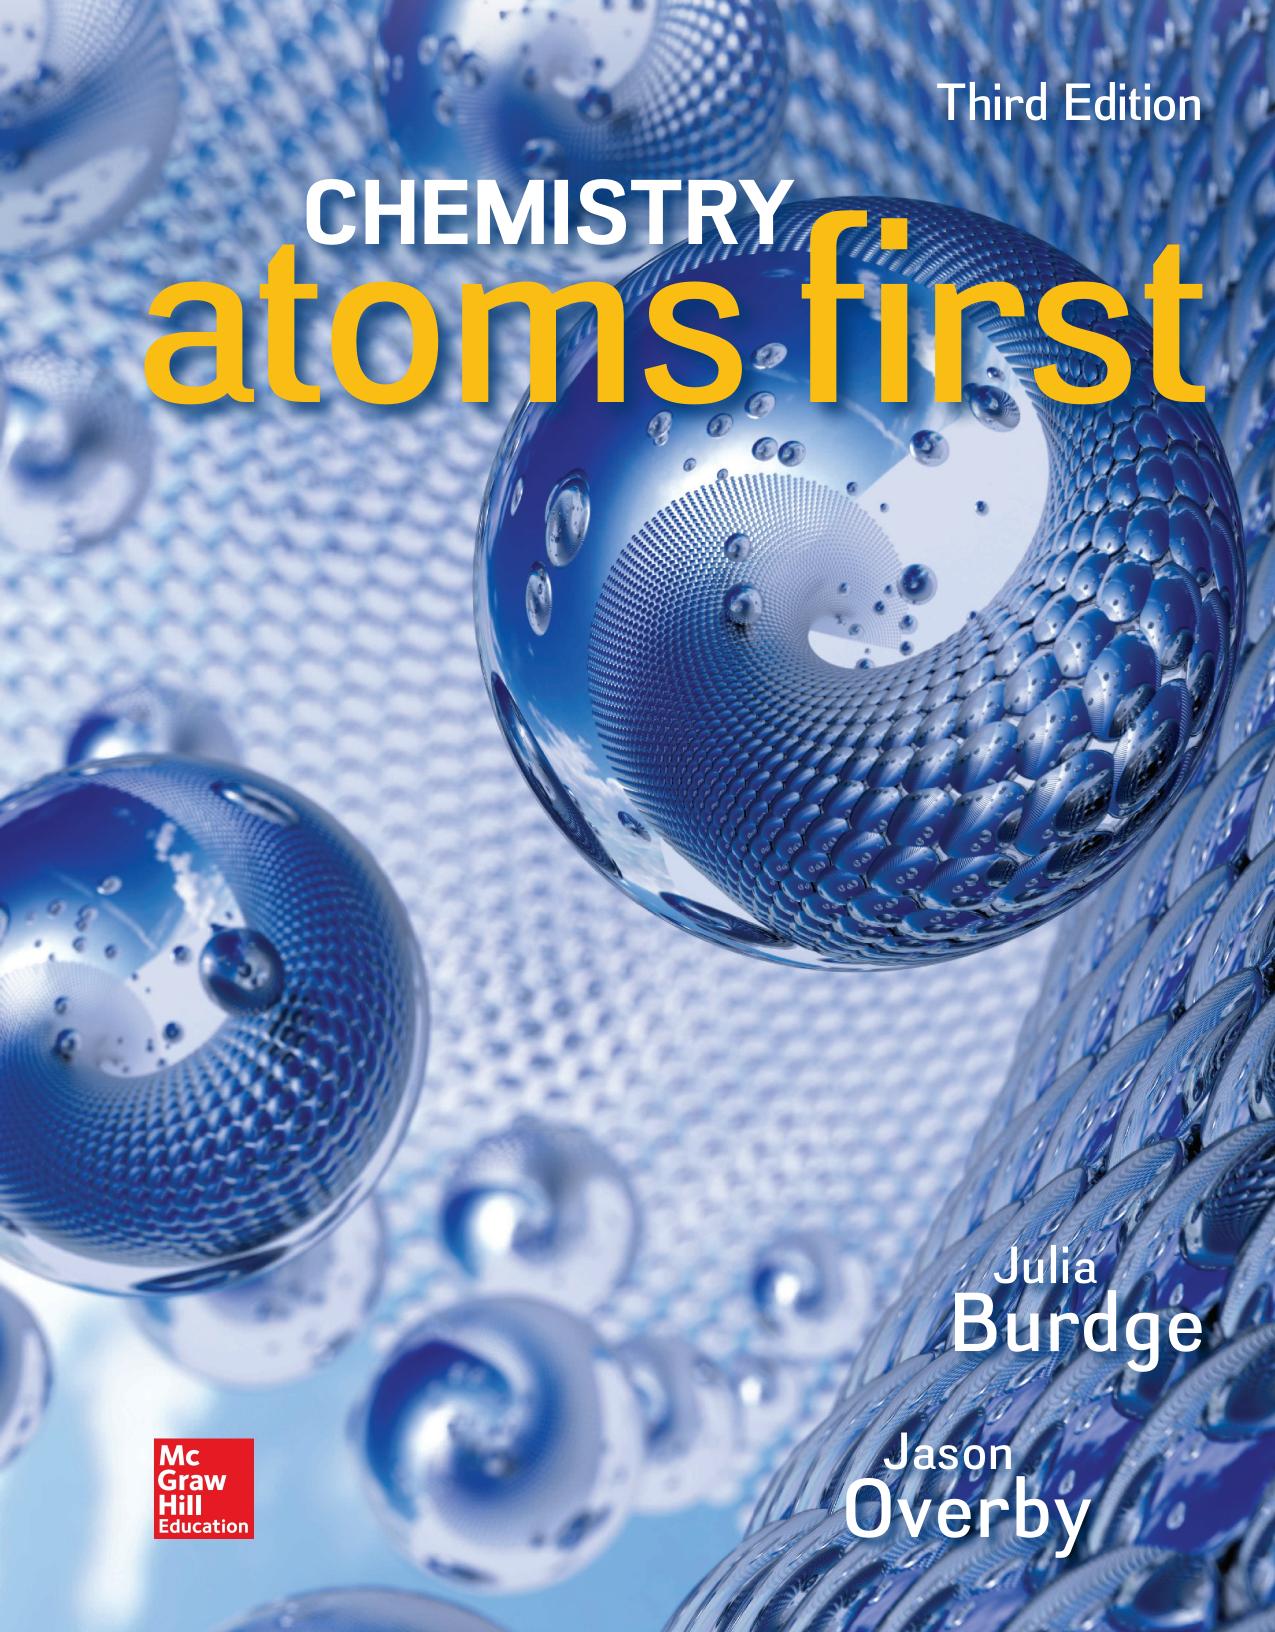 Chemistry Atoms First Third Edition.jpg